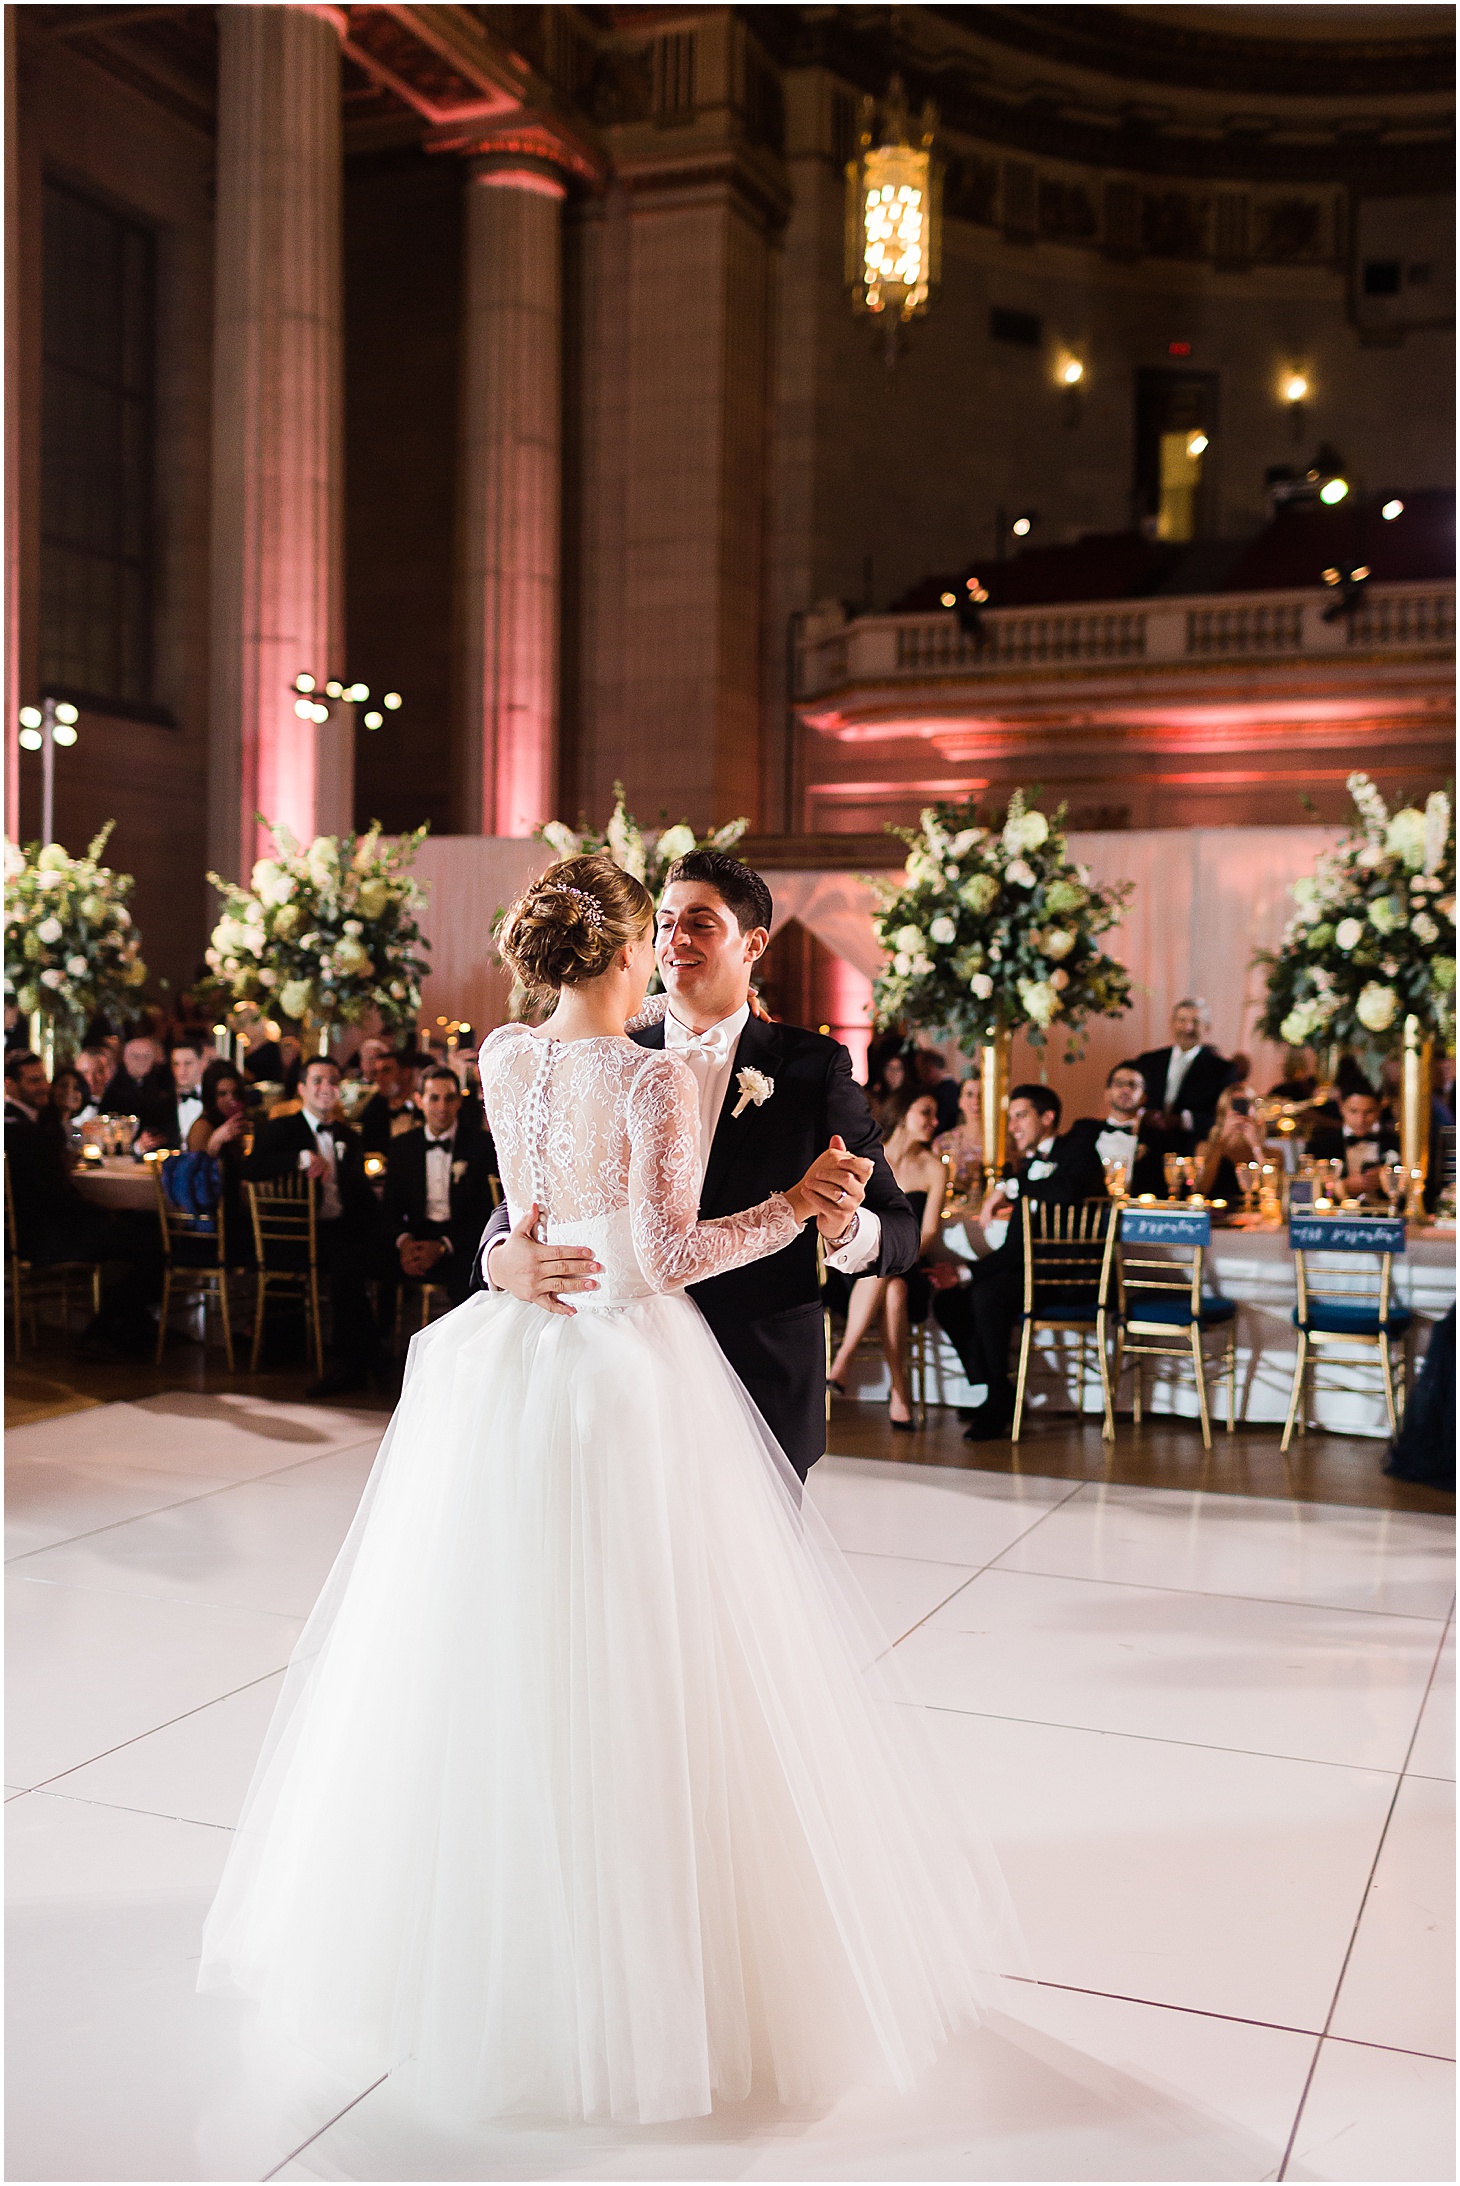 First Dance, Wedding Reception at Andrew Mellon Auditorium, Sarah Bradshaw Photography, DC Wedding Photographer